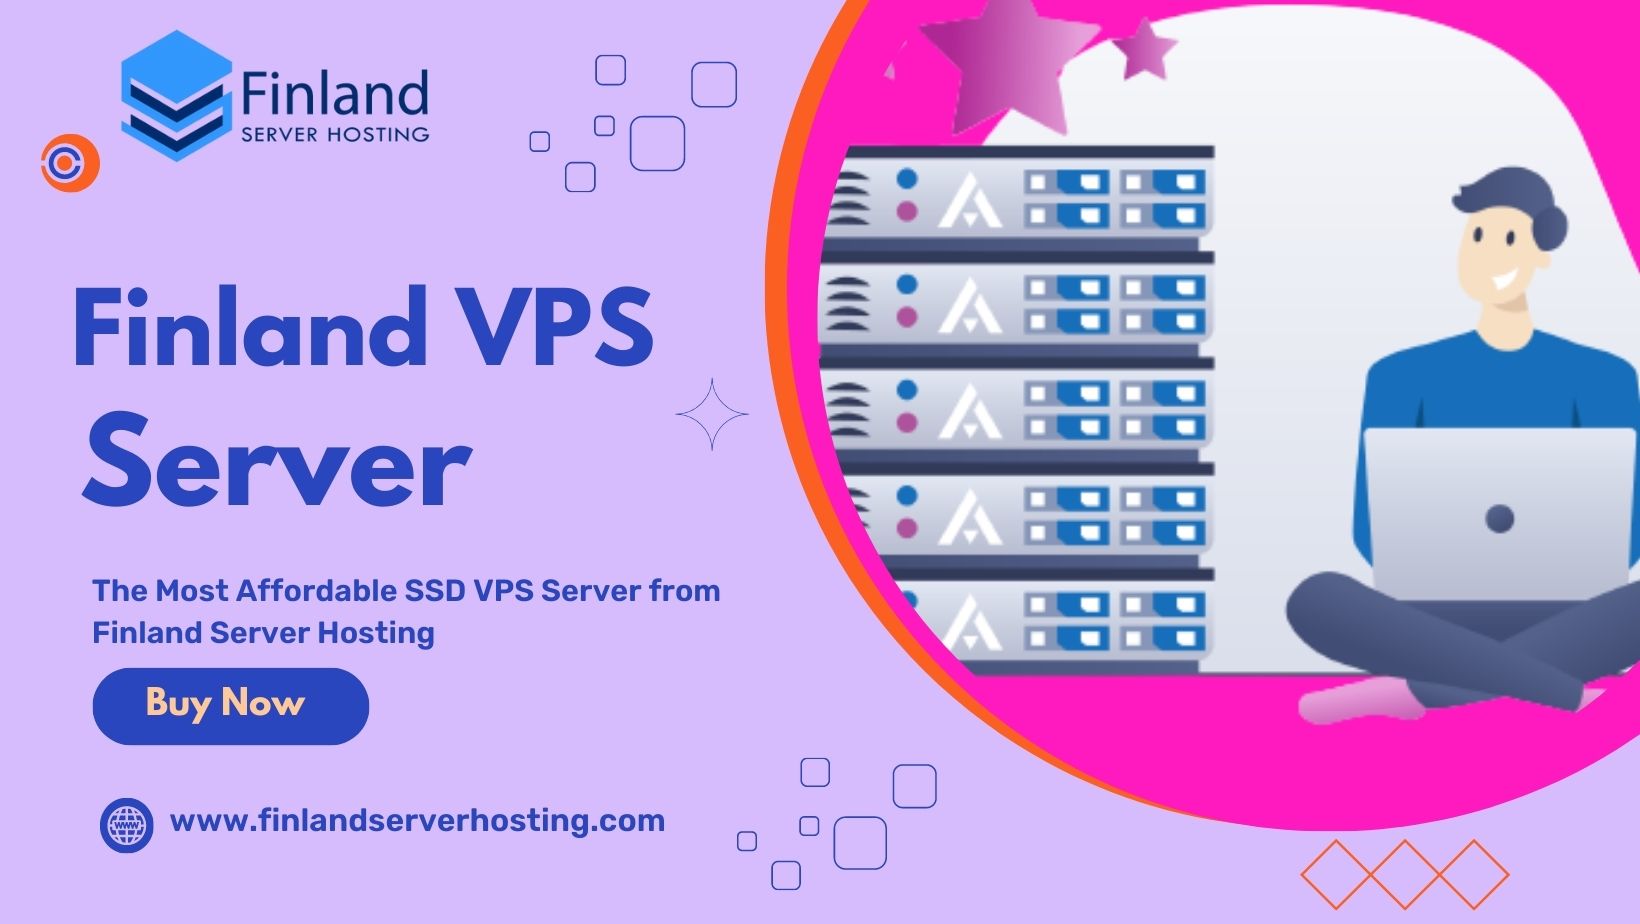 Finland VPS Server